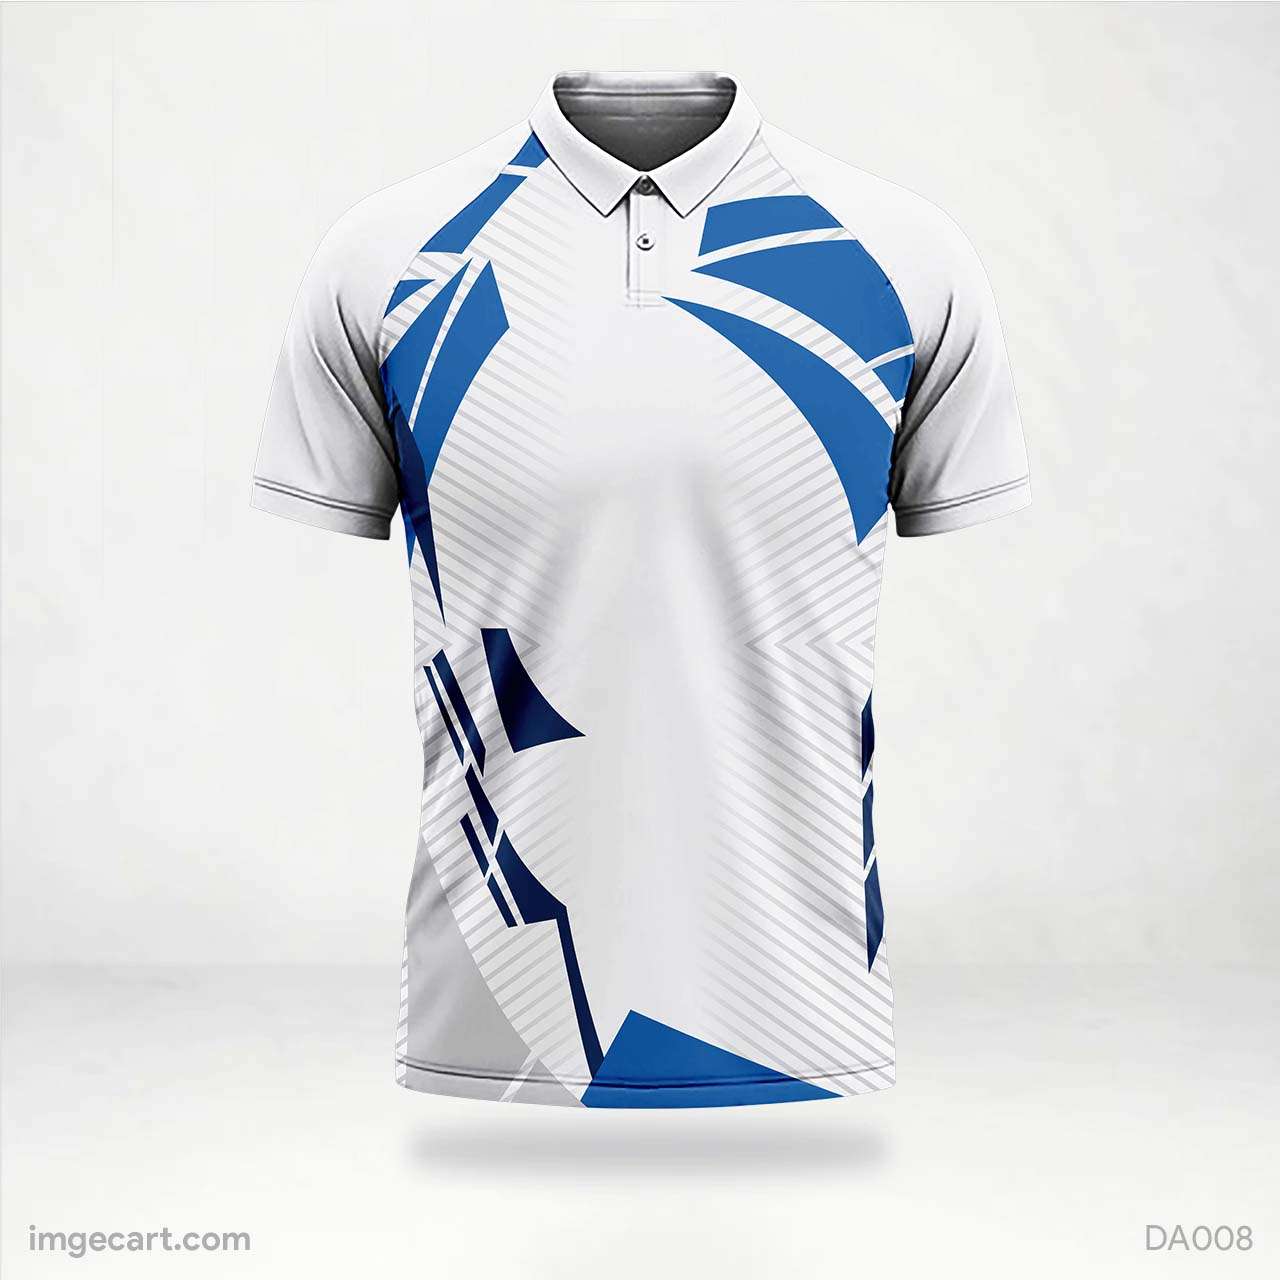 Cricket Jersey Design White with Blue Stripes - imgecart